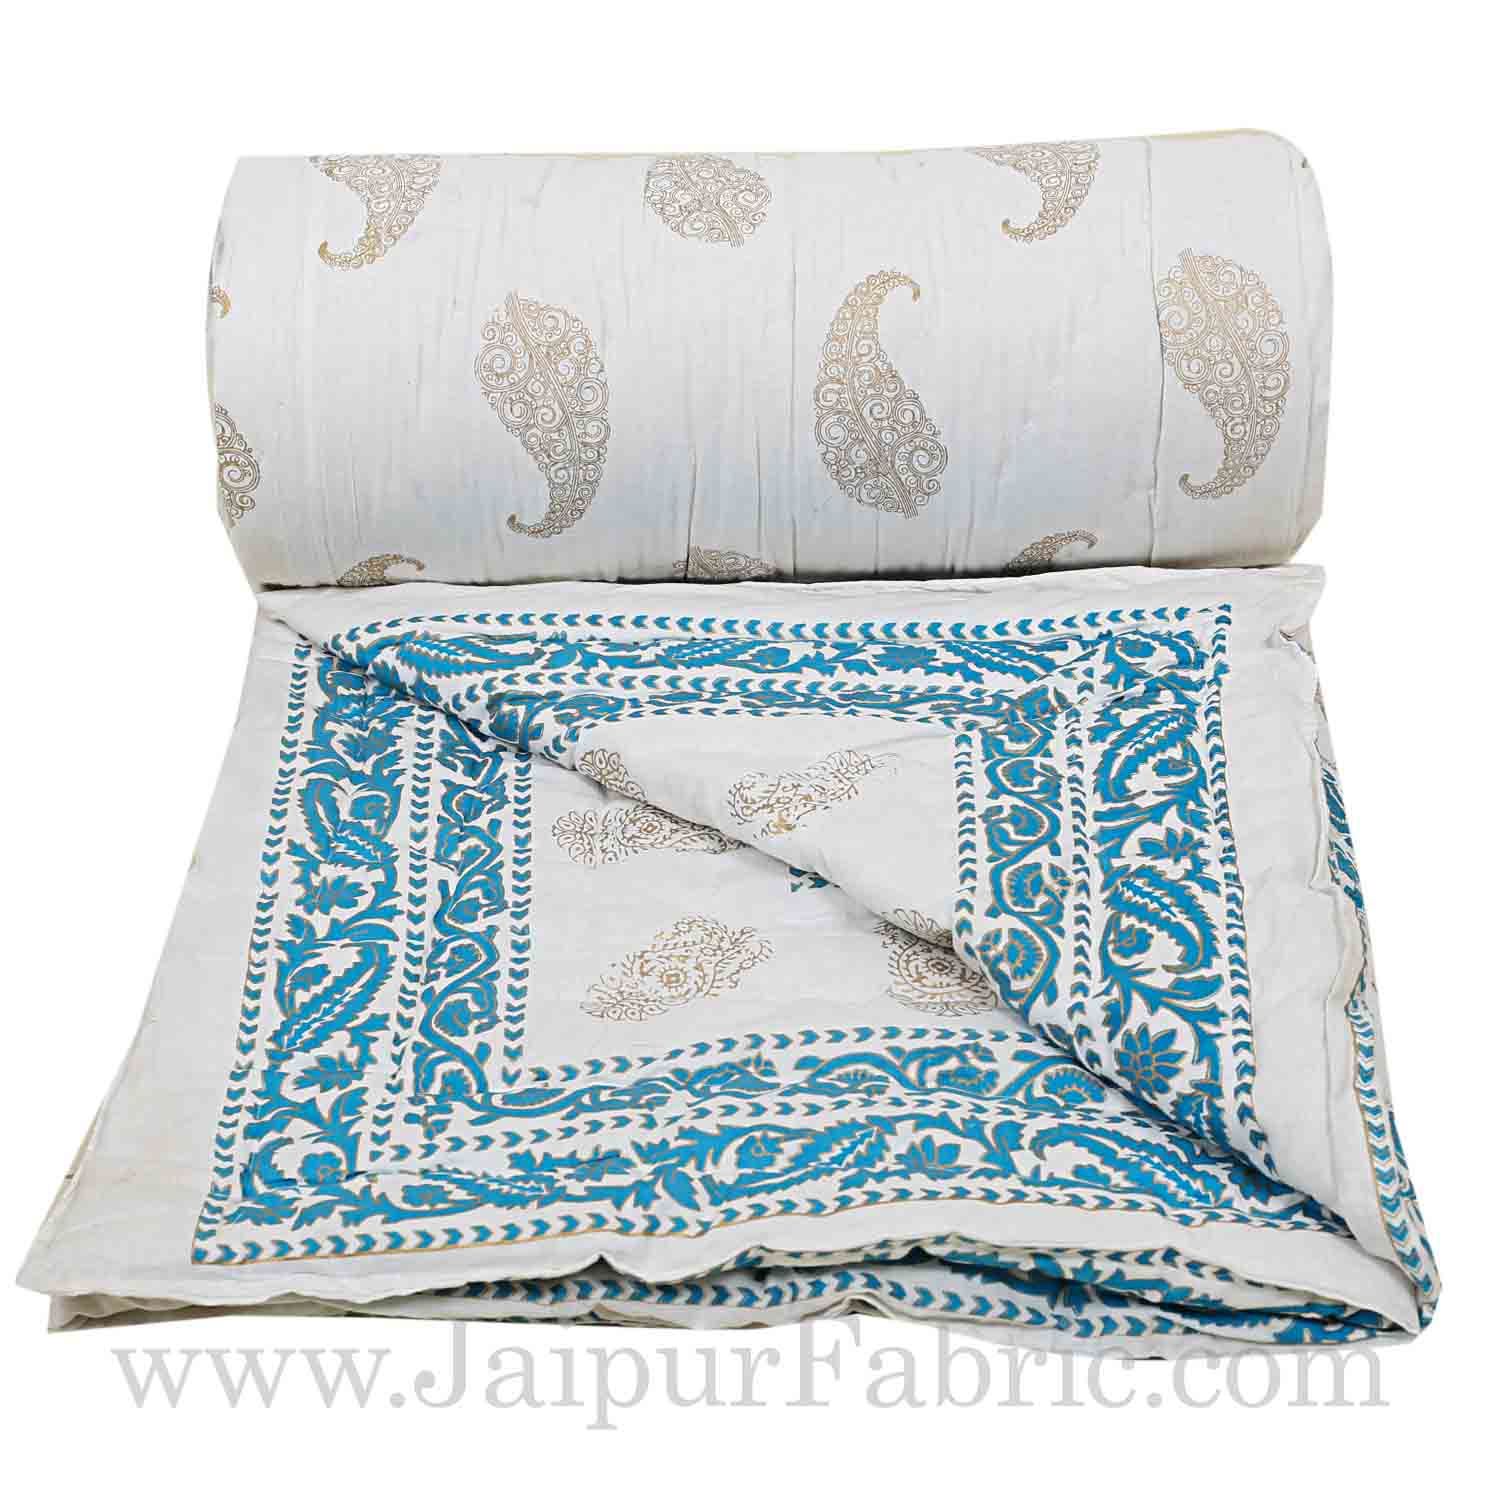 Jaipuri Printed Double Bed Razai Golden  Blue White base with Paisley pattern